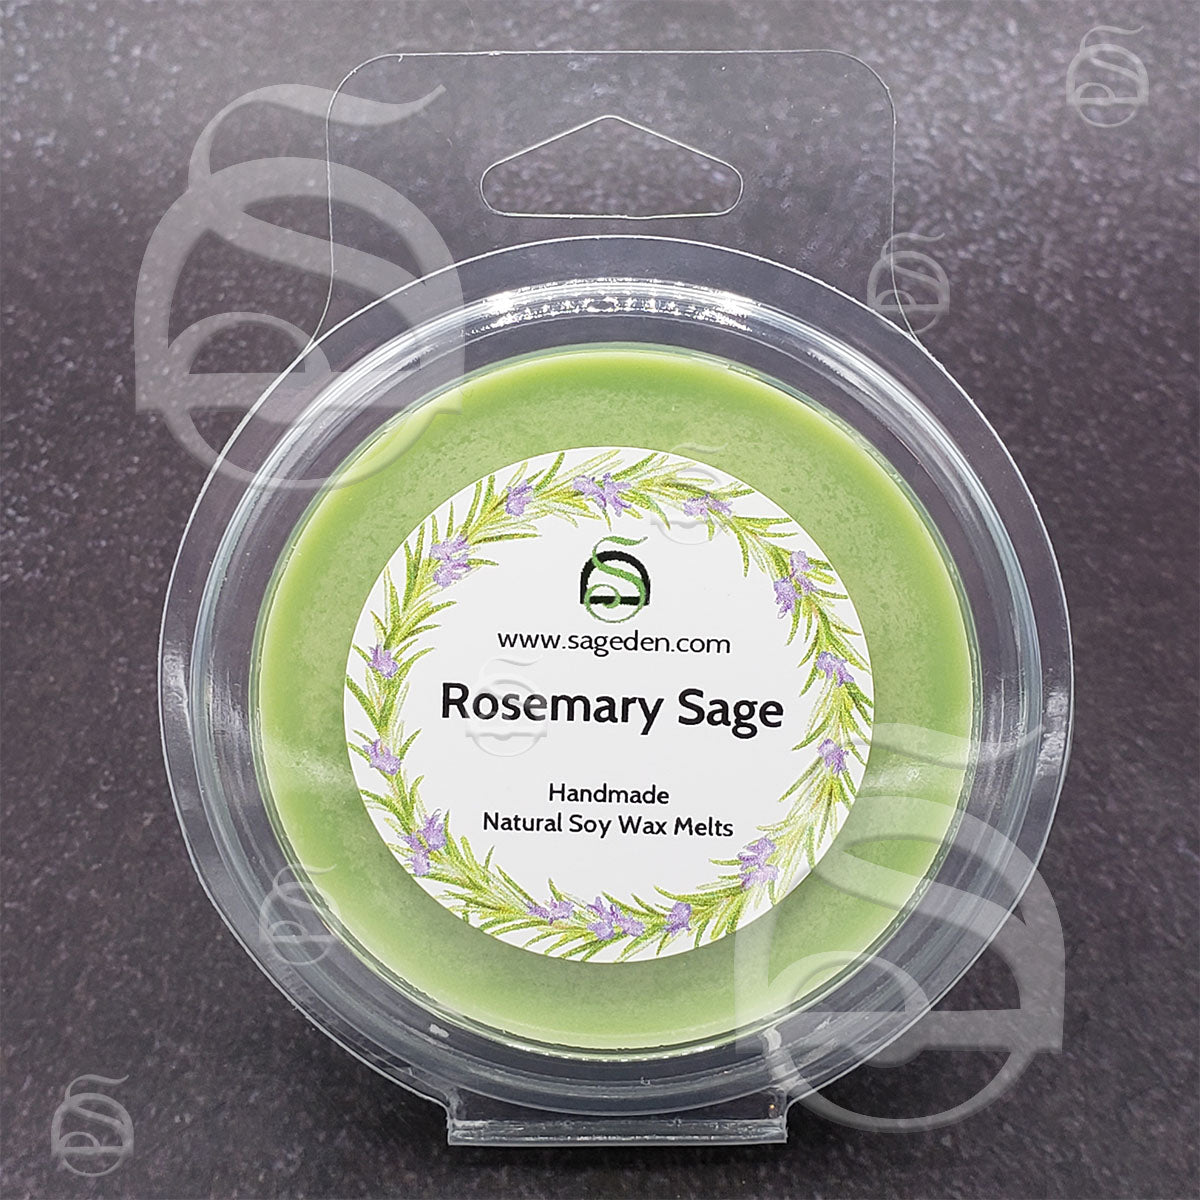 Rosemary Sage Wax Melt (Sage Den Product)